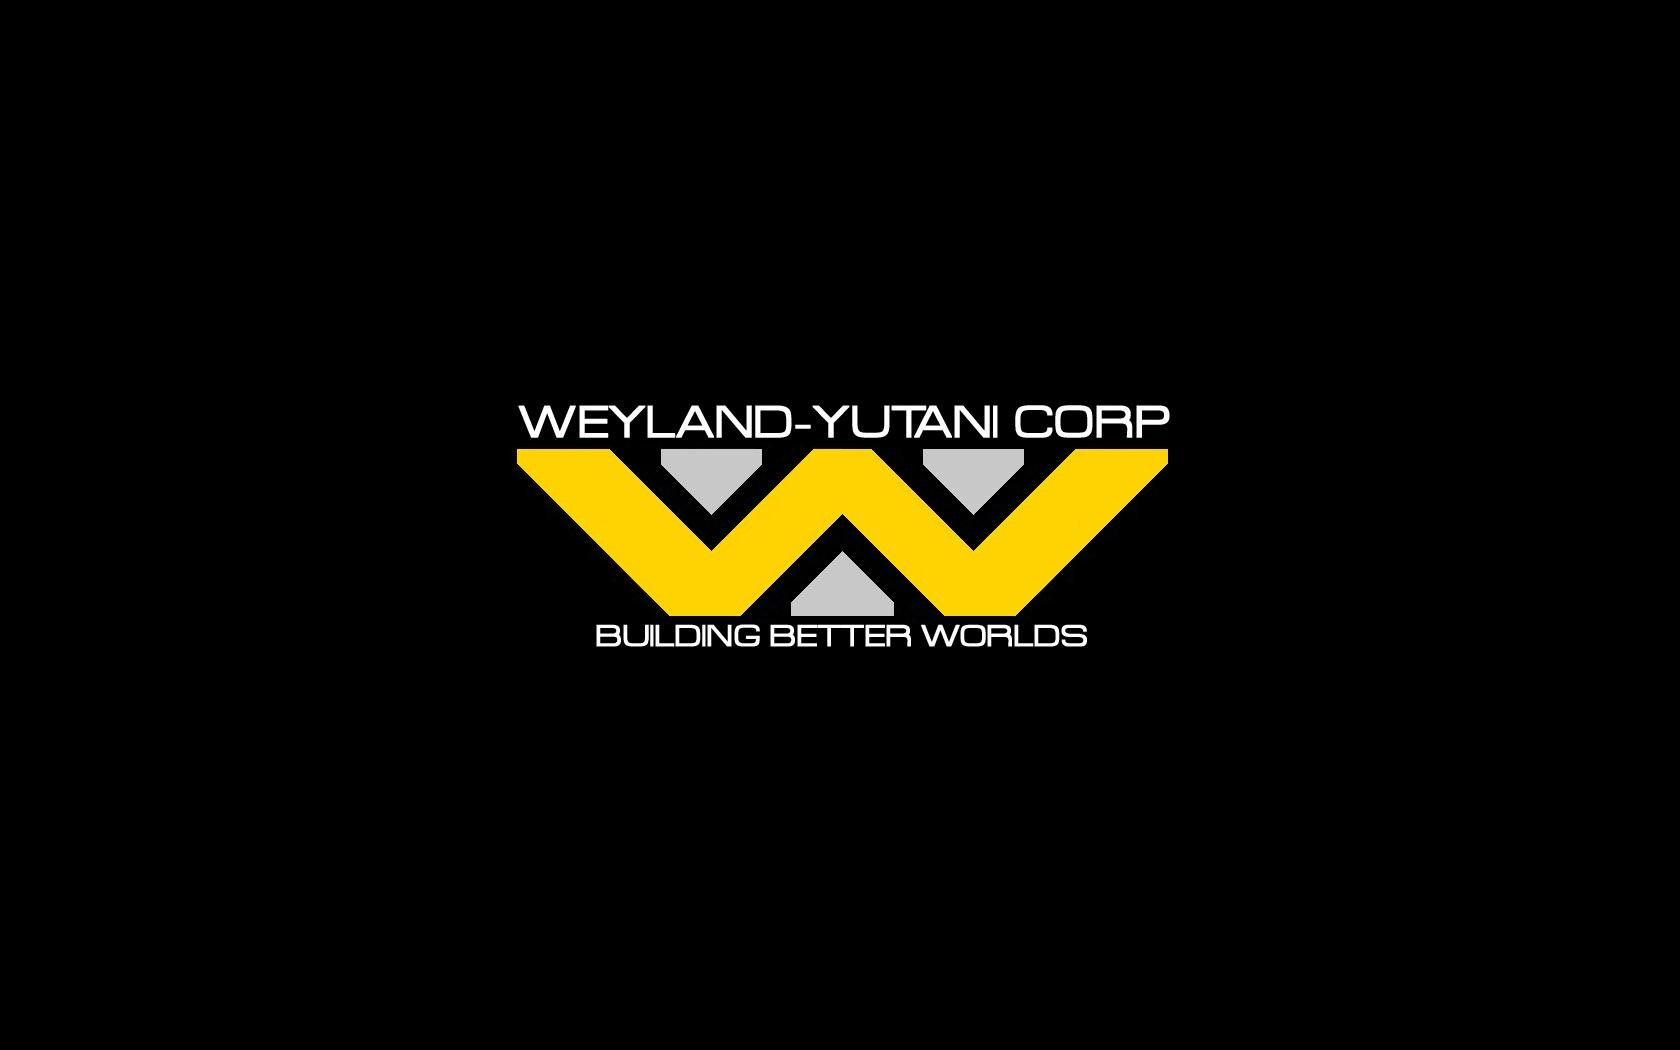 Alien Movie Logo - Wallpaper : artwork, text, logo, Alien movie, brand, Weyland Yutani ...